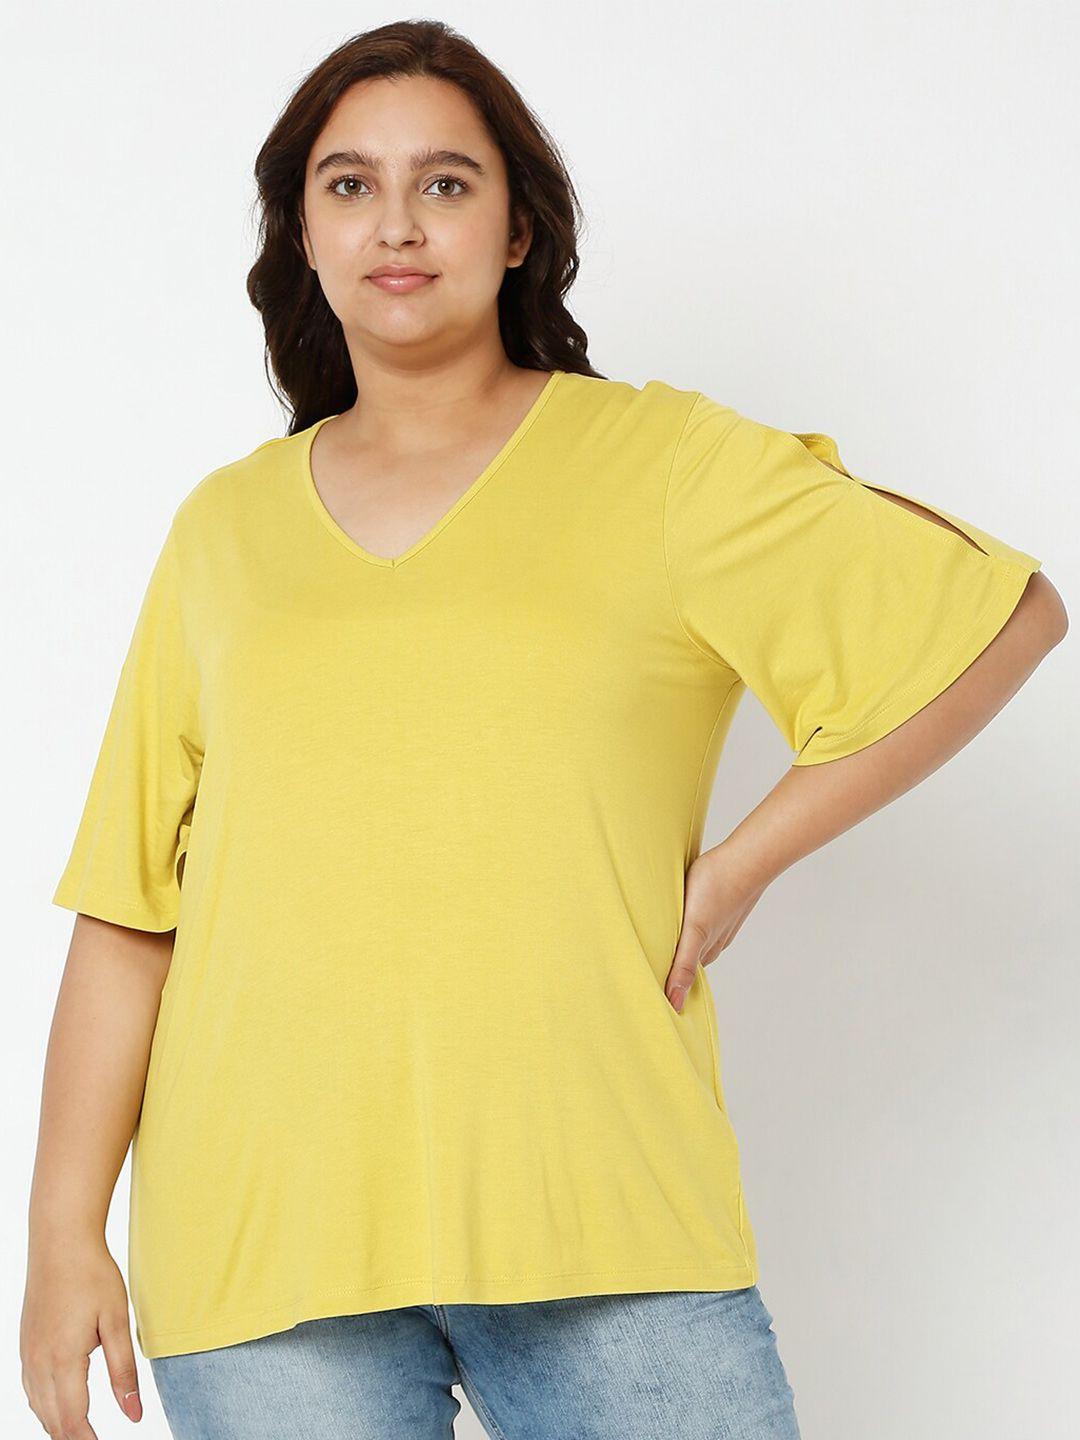 vero moda curve plus size yellow solid v-neck regular top